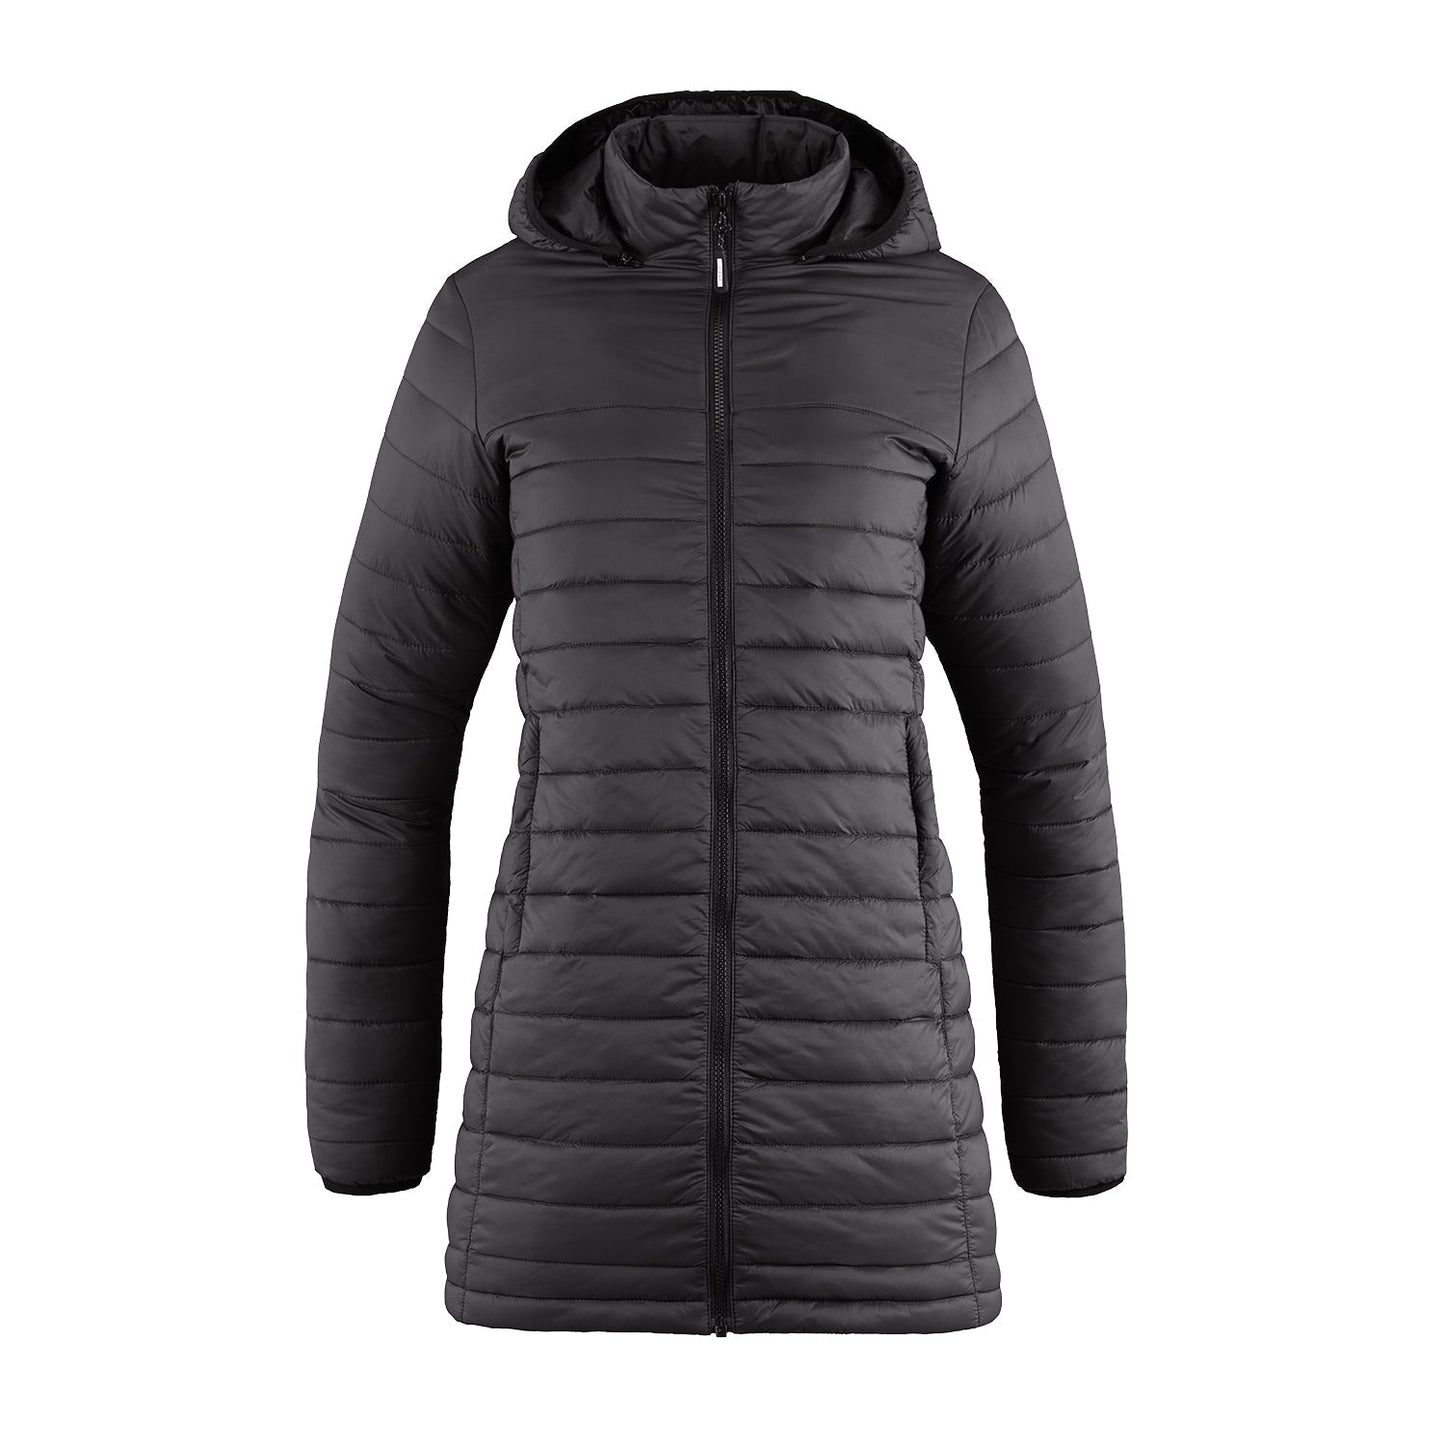 L00903 - Glacier Bay Ladies Long Lightweight Puffy Jacket